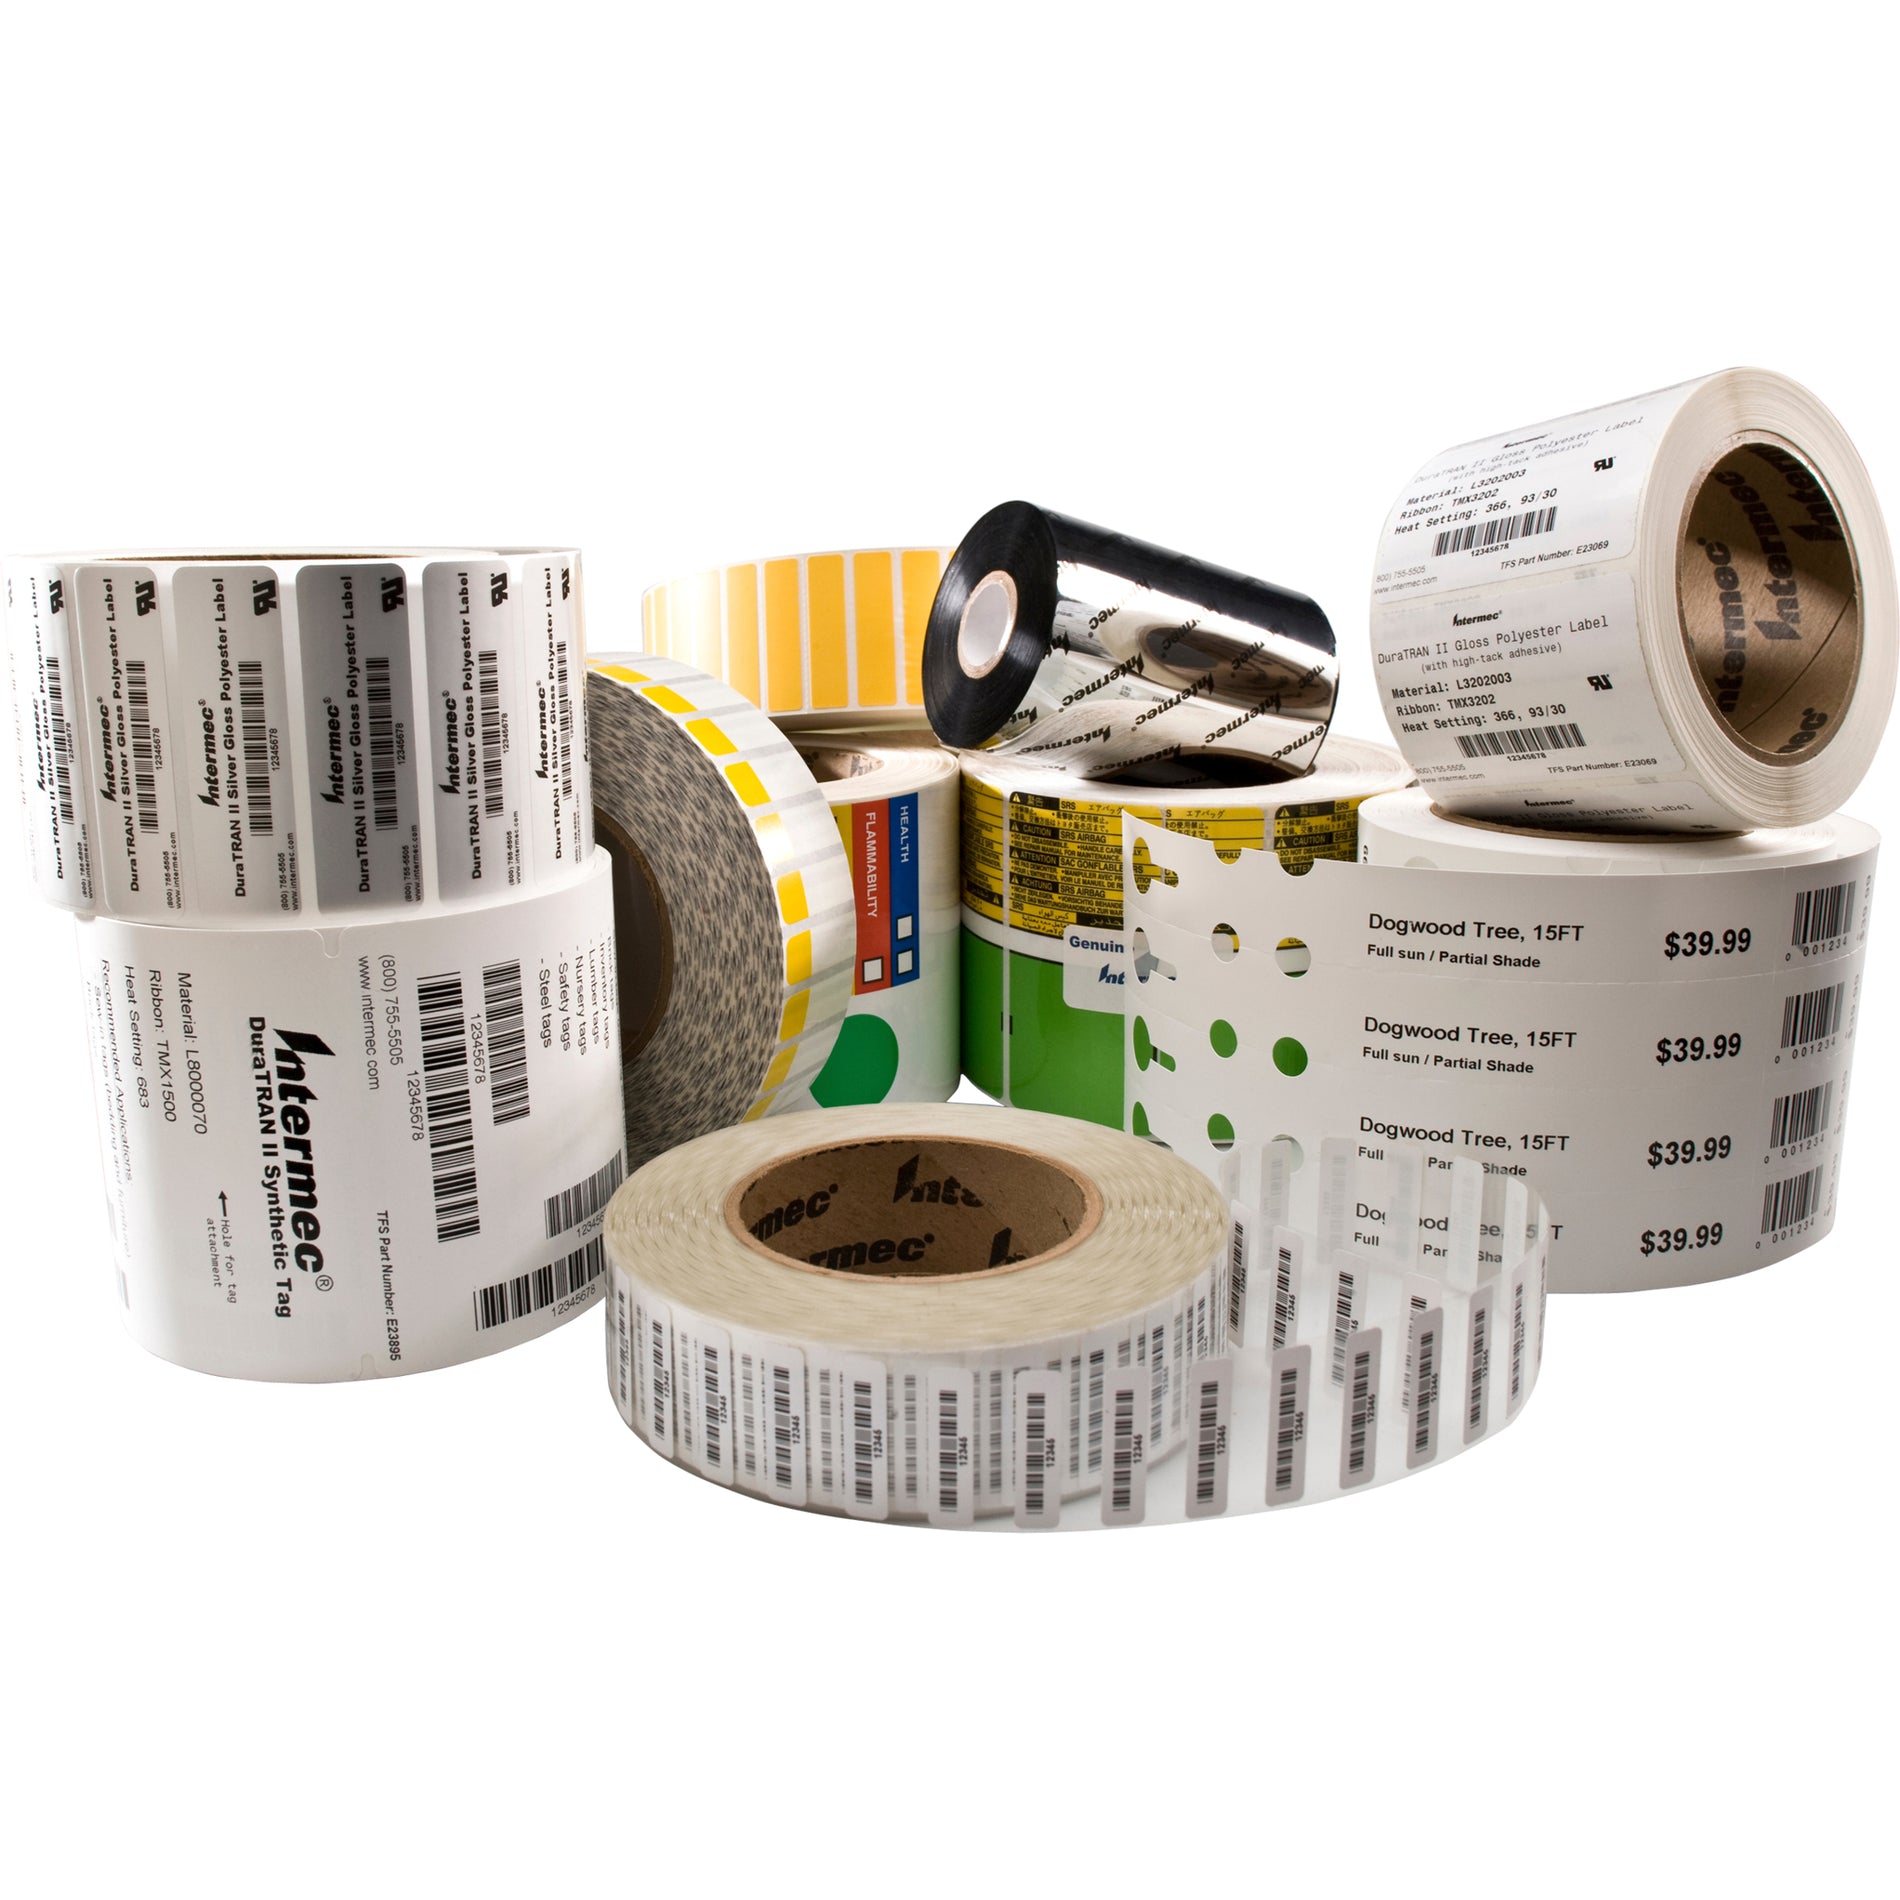 DuraTRAN II Multipurpose Label - Perforated, Heat Resistant, Abrasion Resistant [Discontinued]